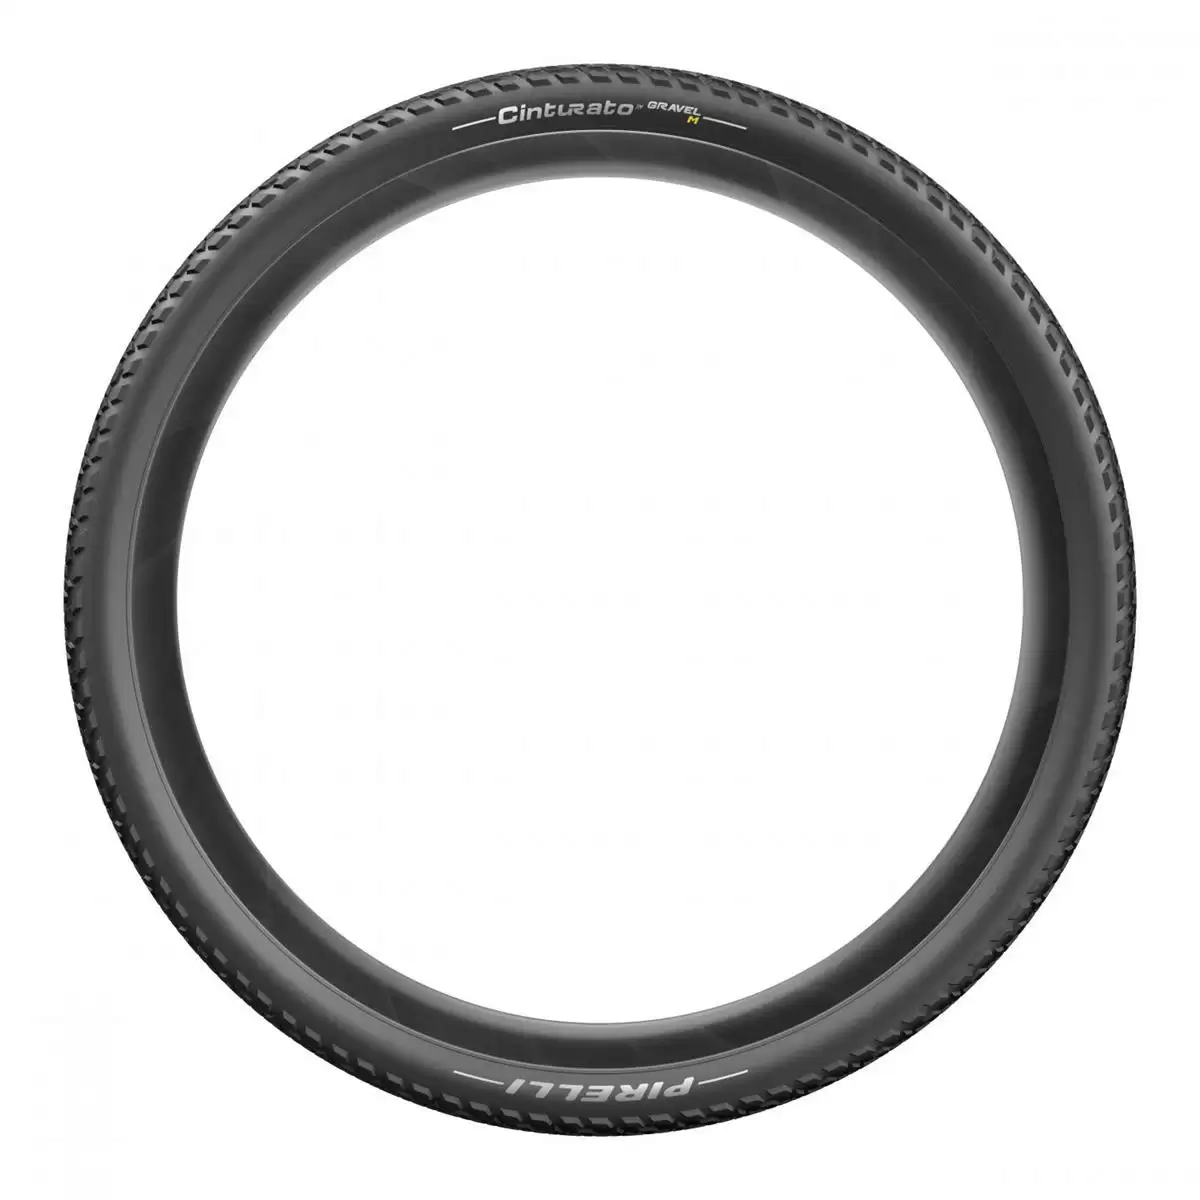 Tire Cinturato Gravel Mixed Terrain 700x40c Tubeless Ready Black #3